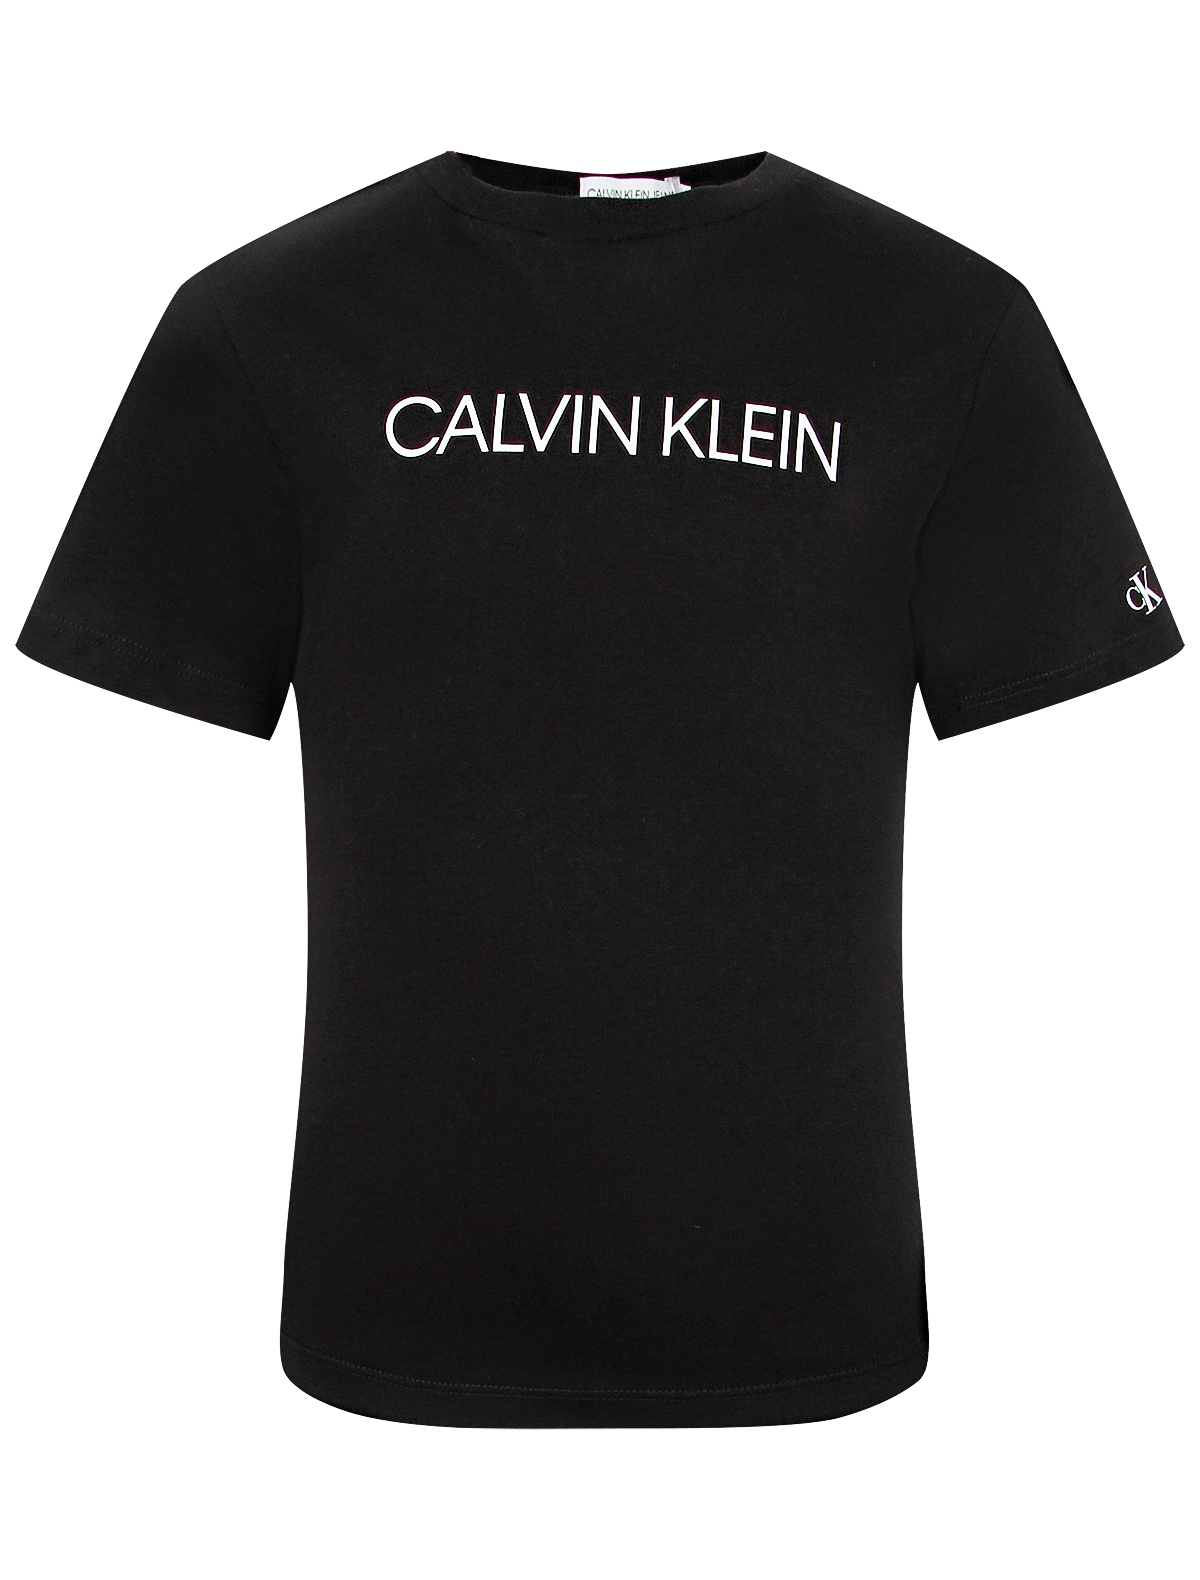 Футболки кельвин кляйн купить. Футболка Кельвин Кляйн джинс. Черная футболка Кельвин Кляйн. Кальвин Клейн футболка. Calvin Klein Jeans футболка мужская черная.